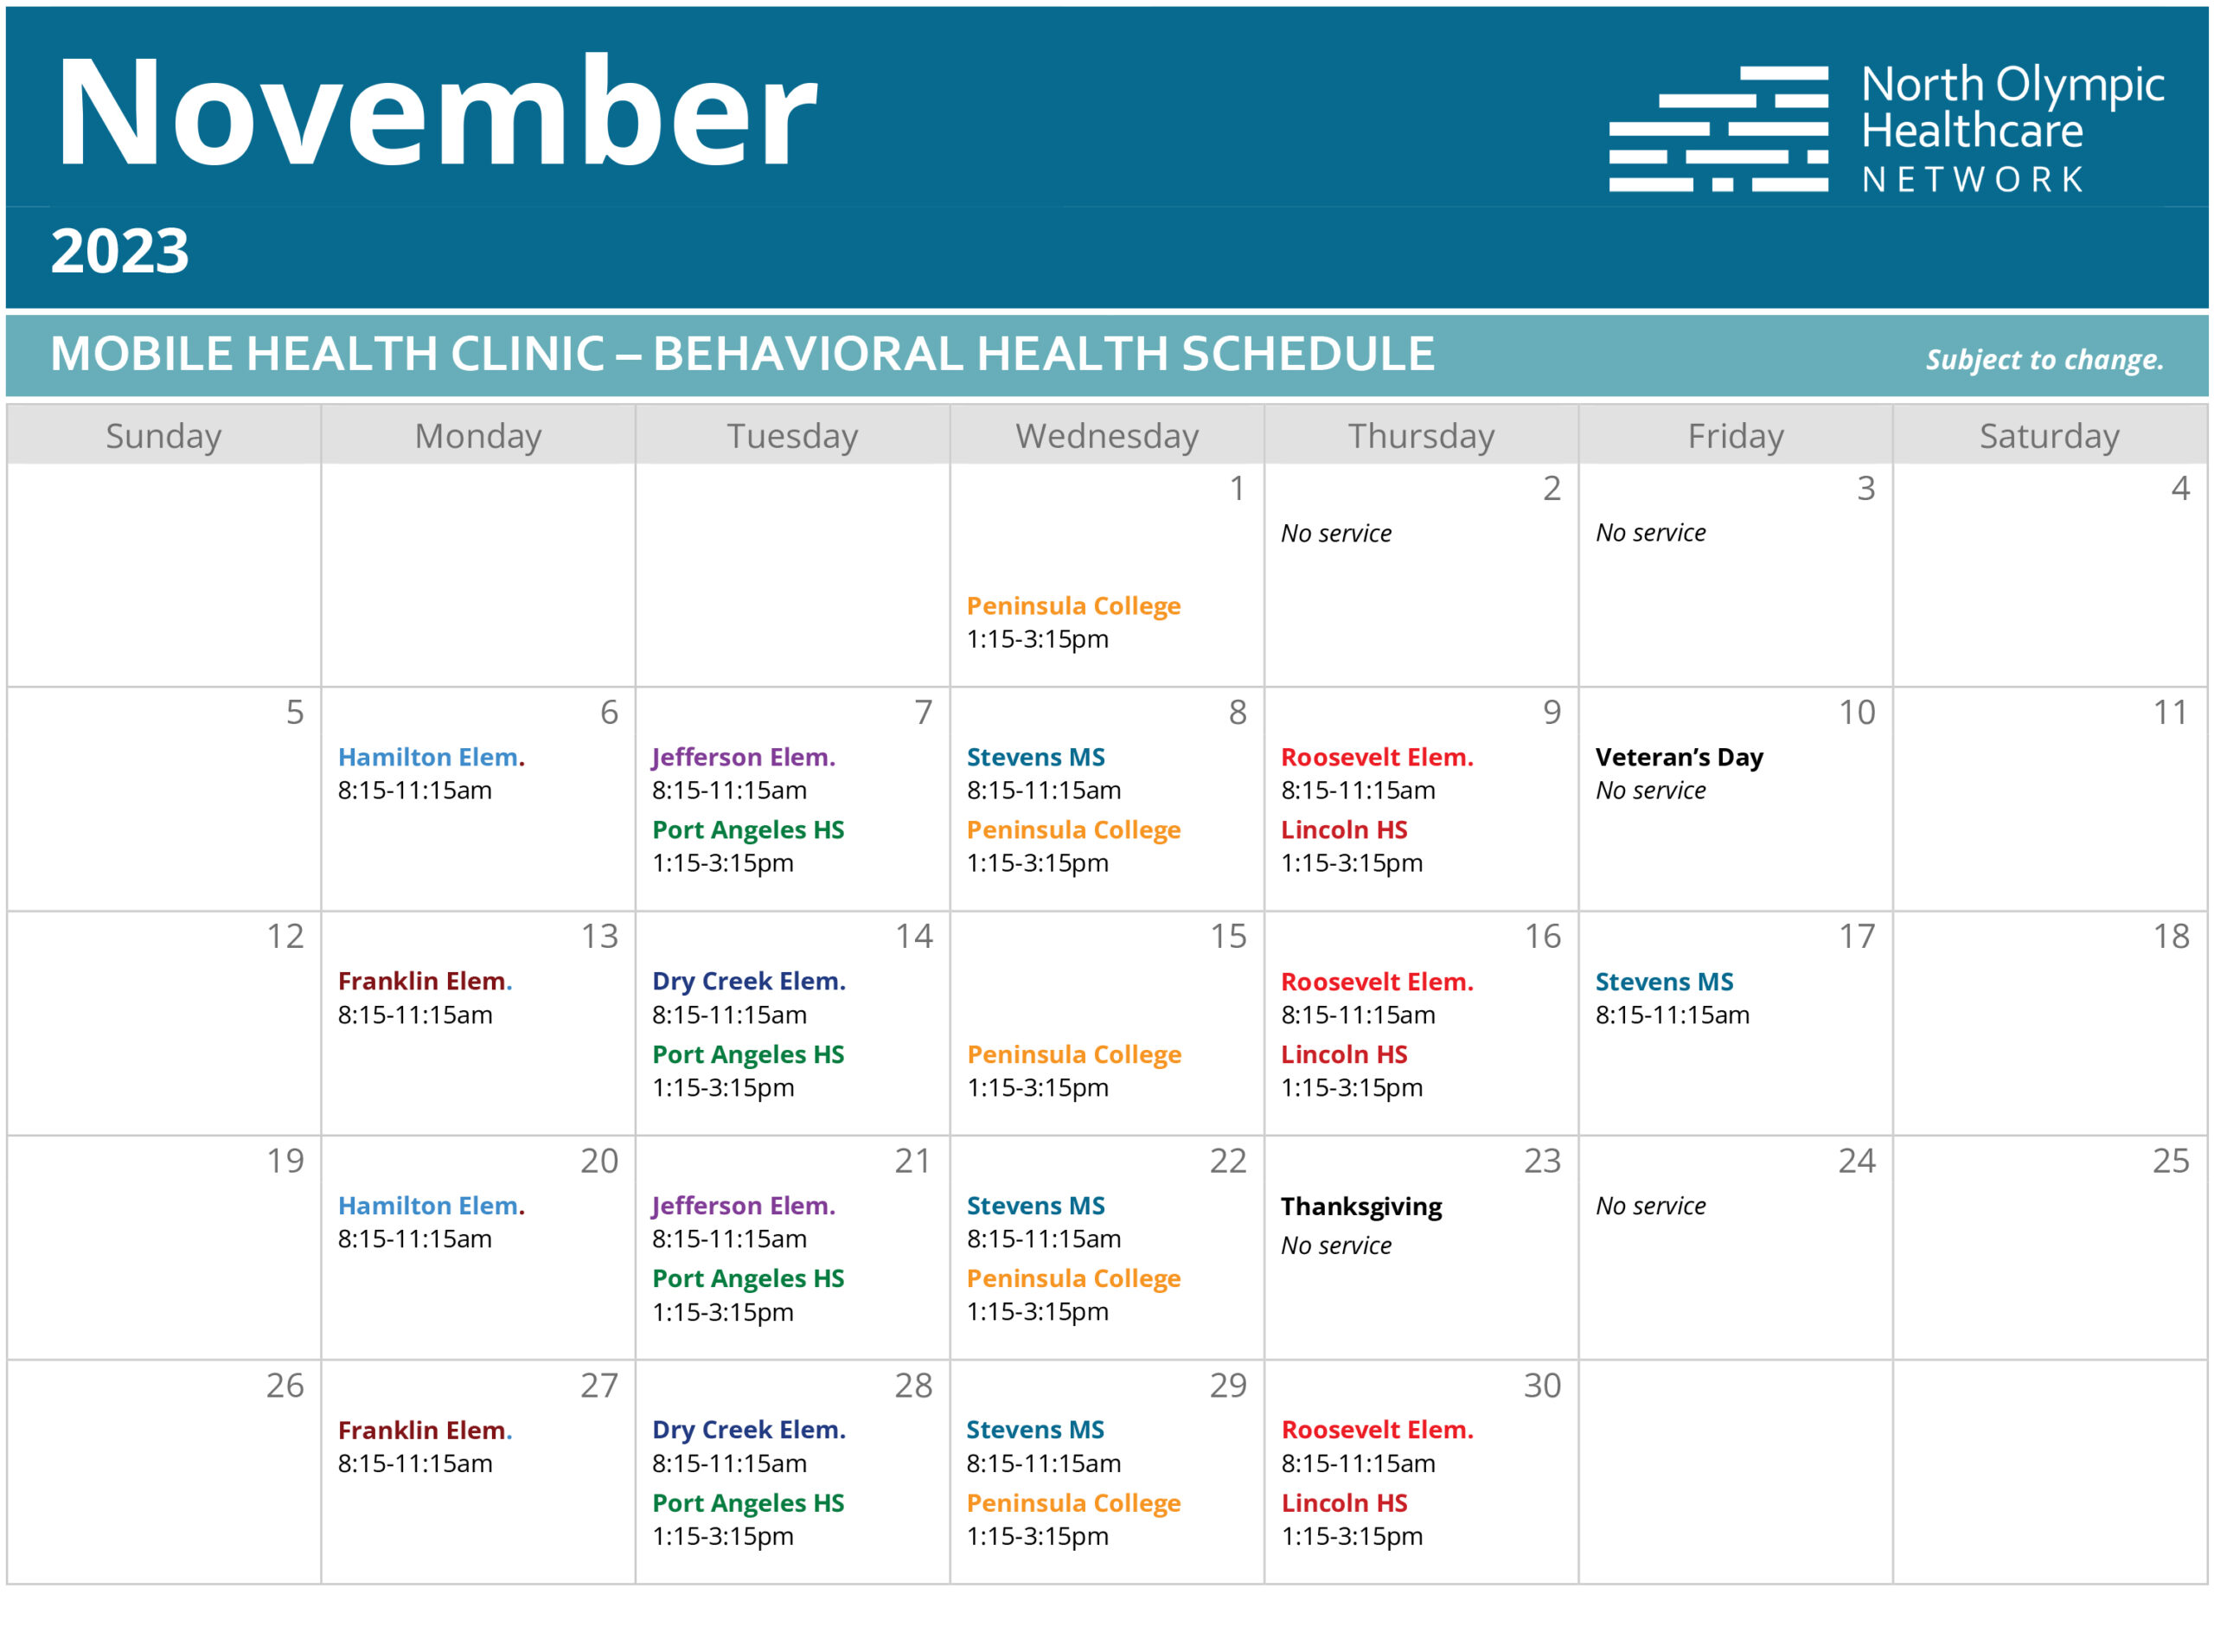 Calendar of Mobile Health Clinic visits in November 2023.